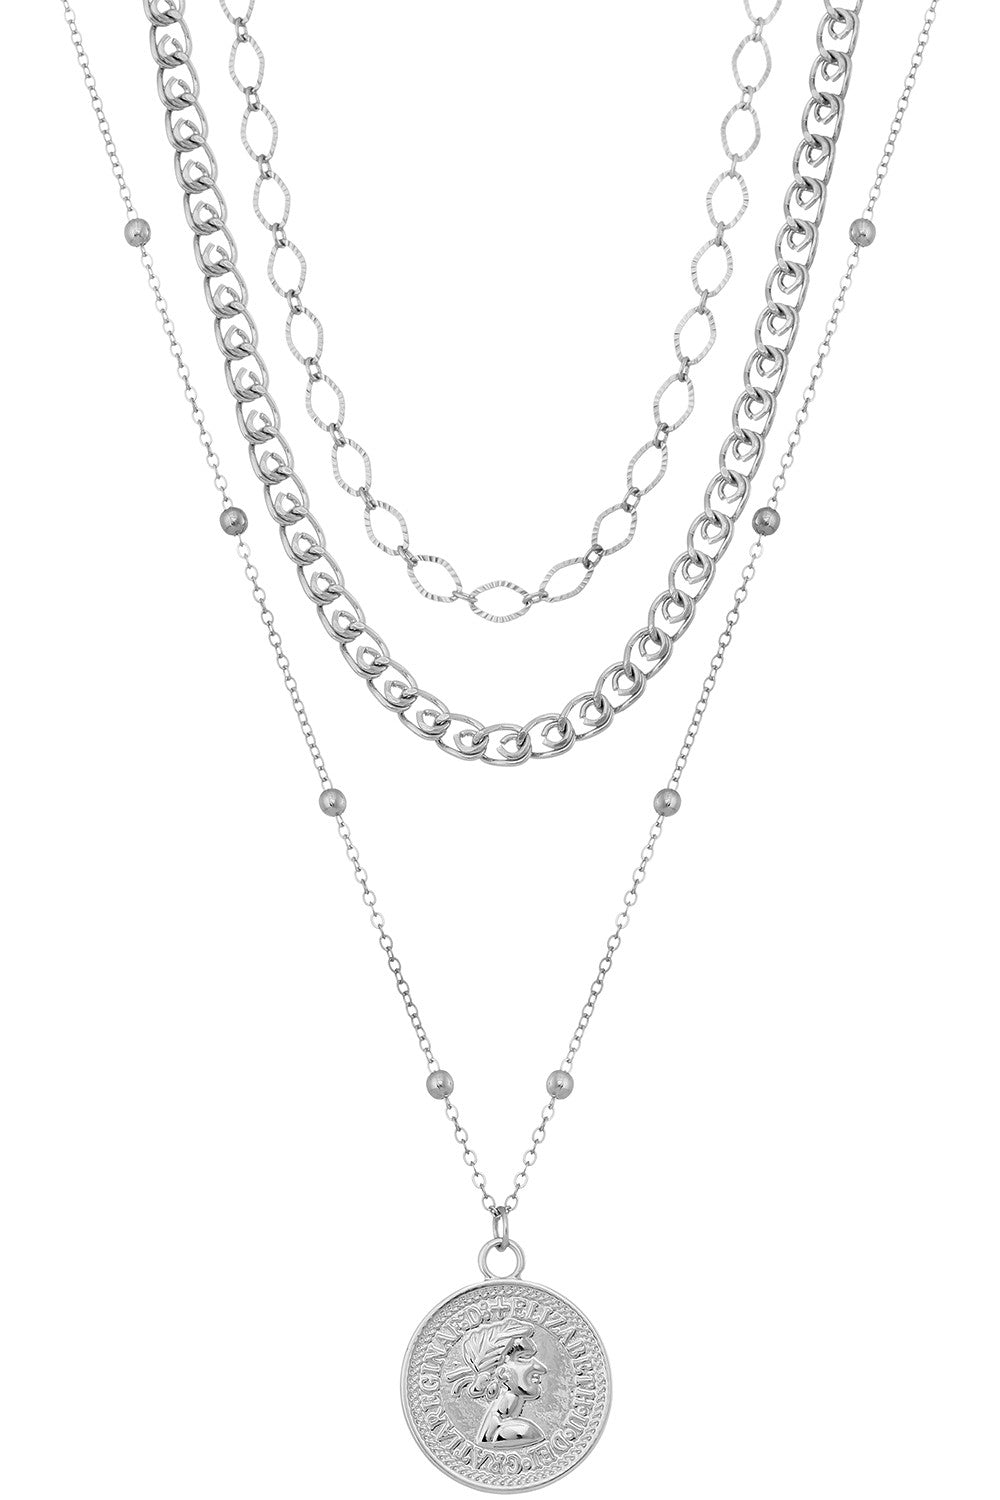 The Bari Necklace